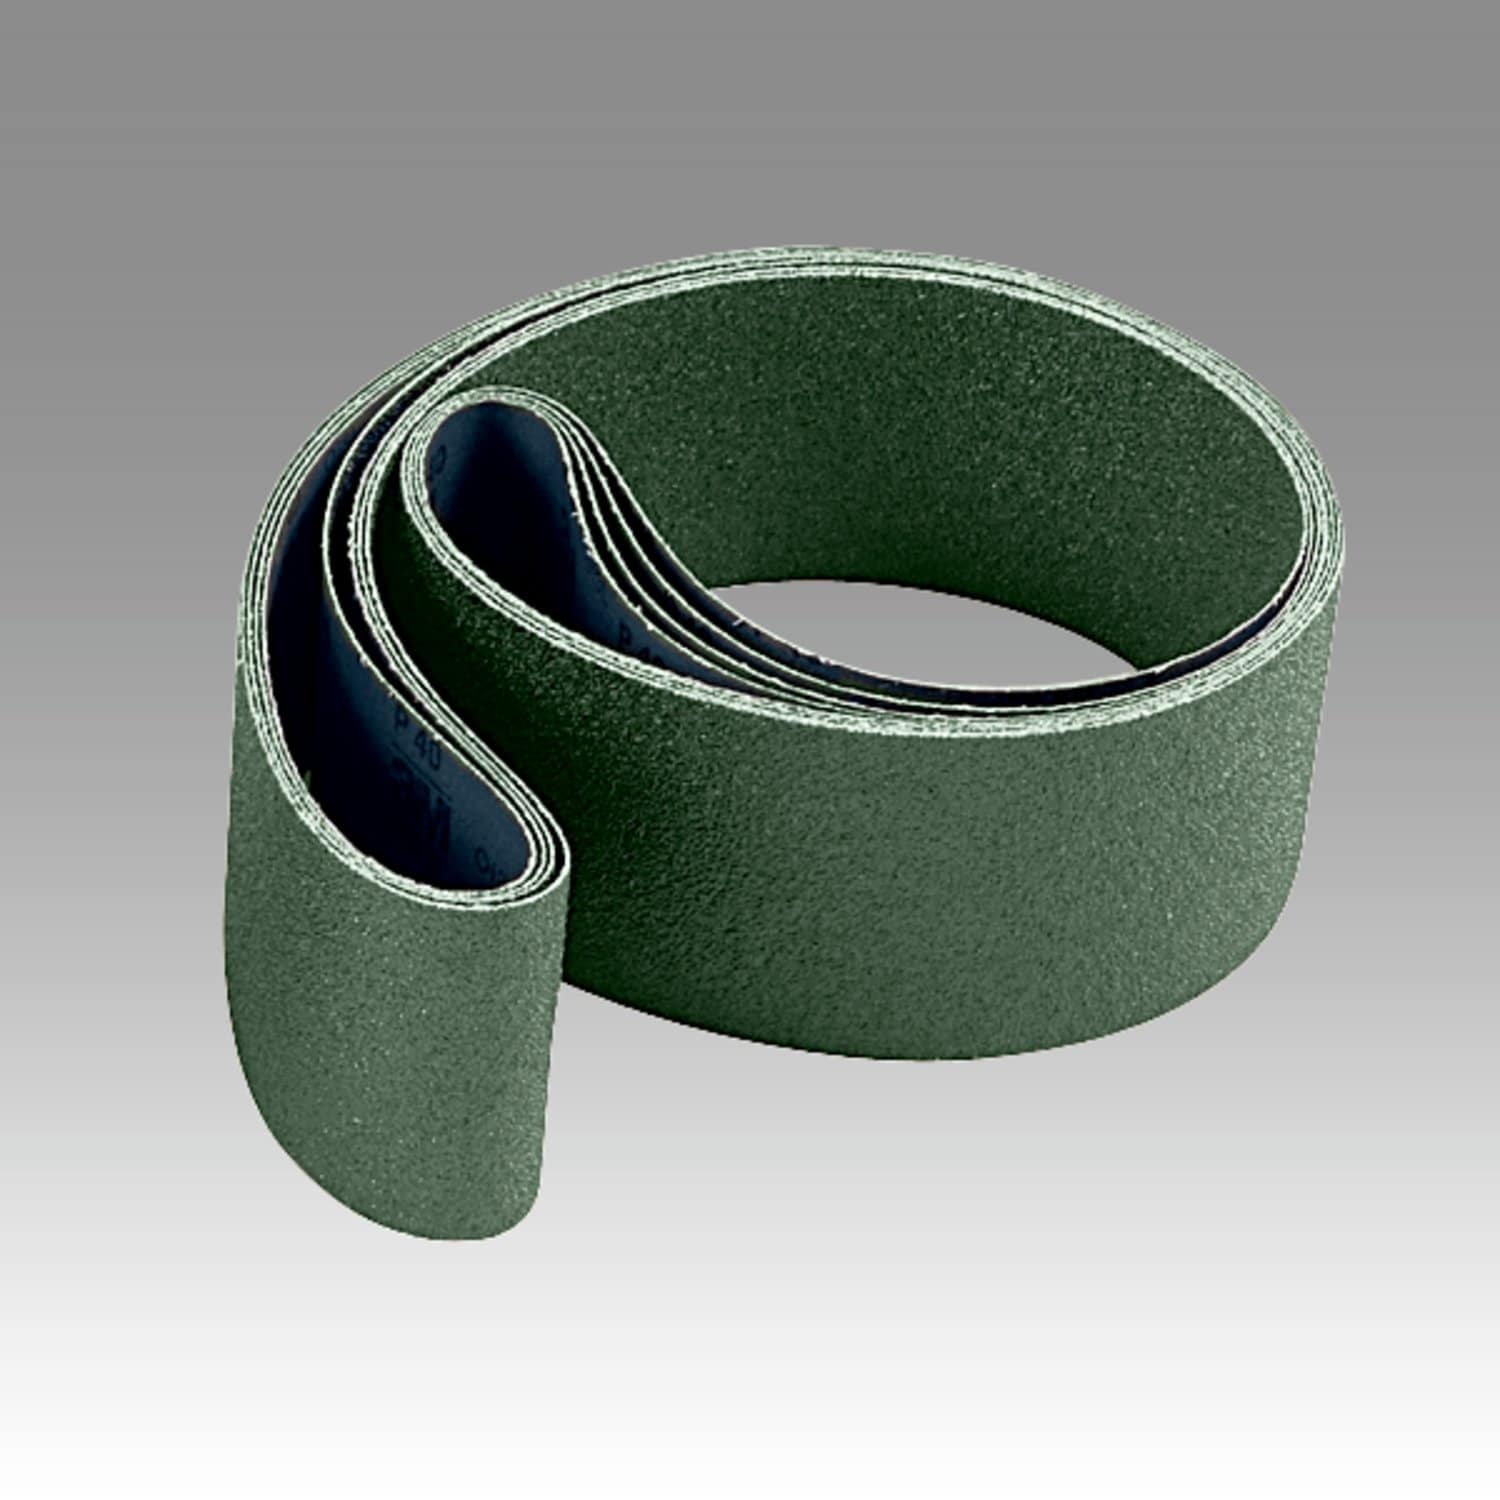 7010365871 - Scotch-Brite Surface Conditioning Low Stretch Belt, SC-BL, SiC Very
Fine, 3 in x 132 in, 5 ea/Case